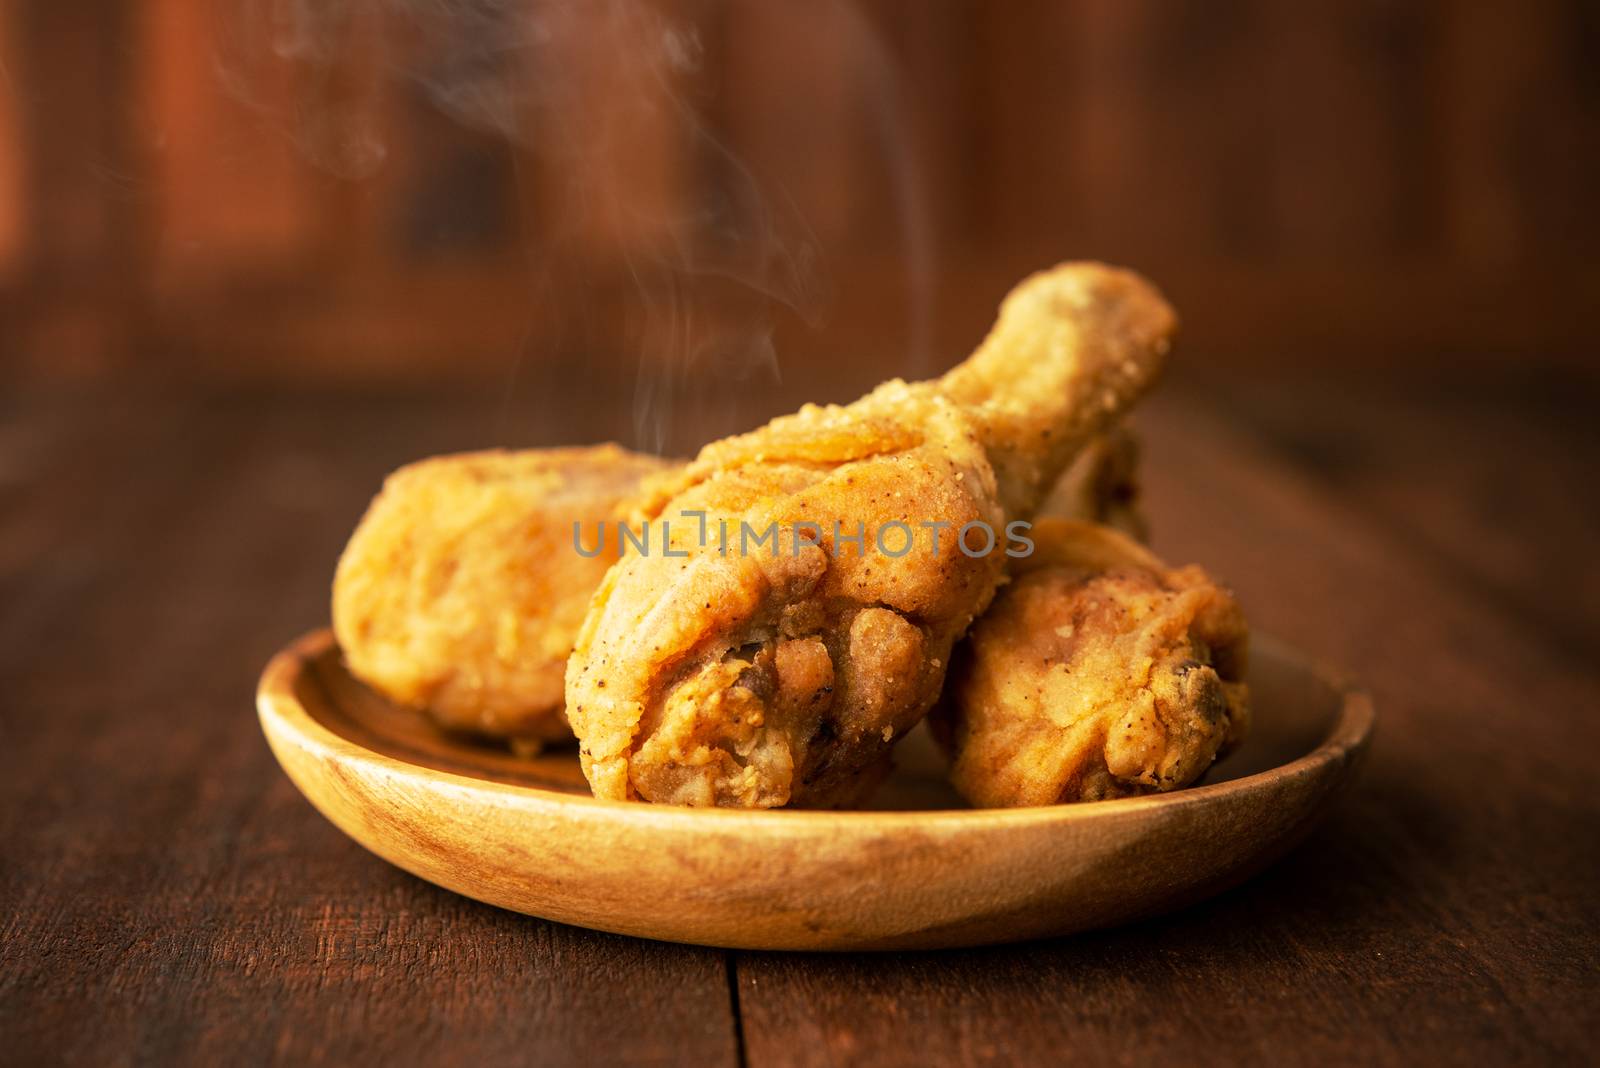 Plate of original recipe fried chickens by szefei